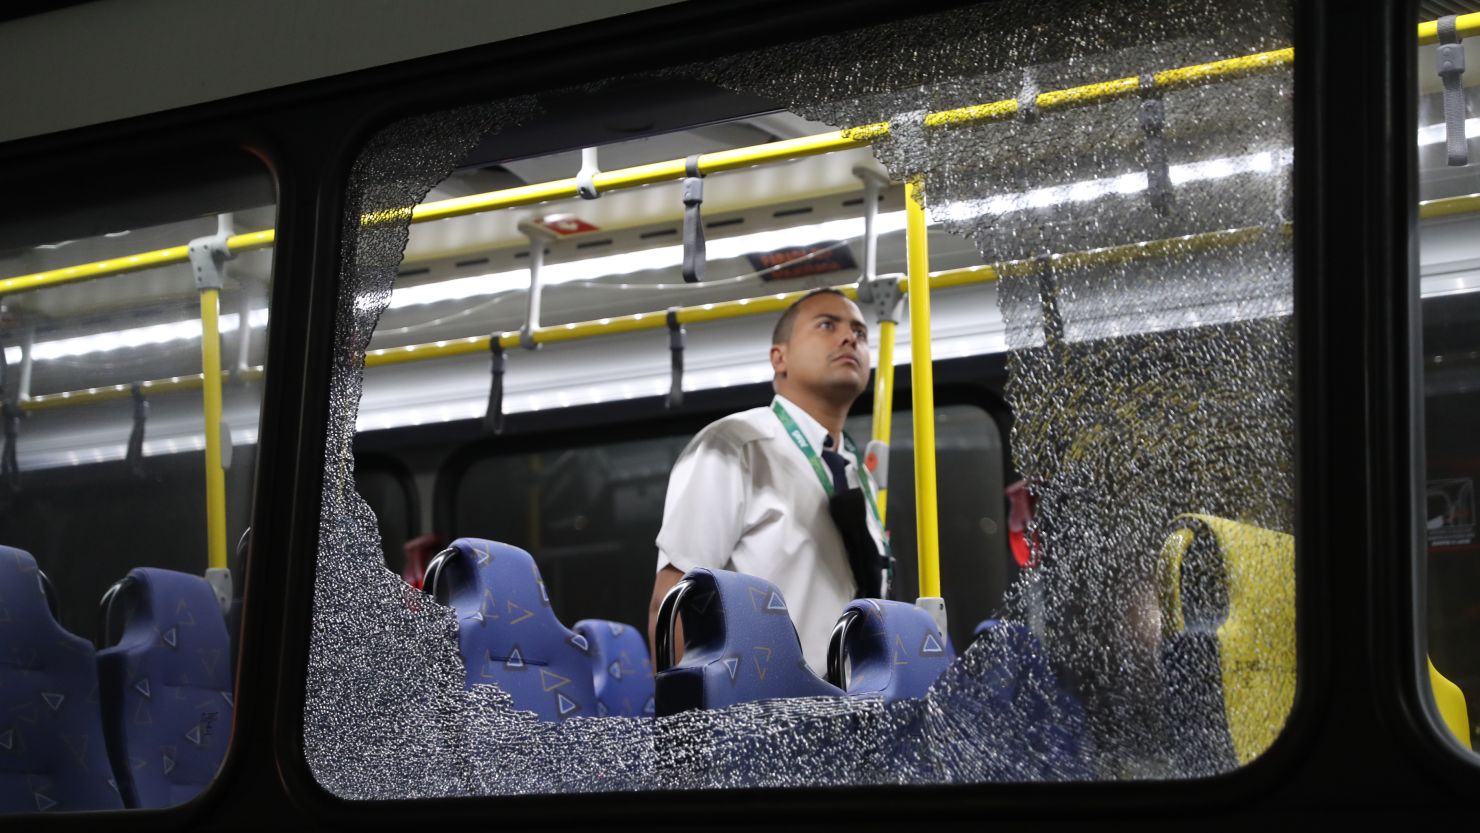 Rio Olympics media bus 'came under gunfire' | CNN